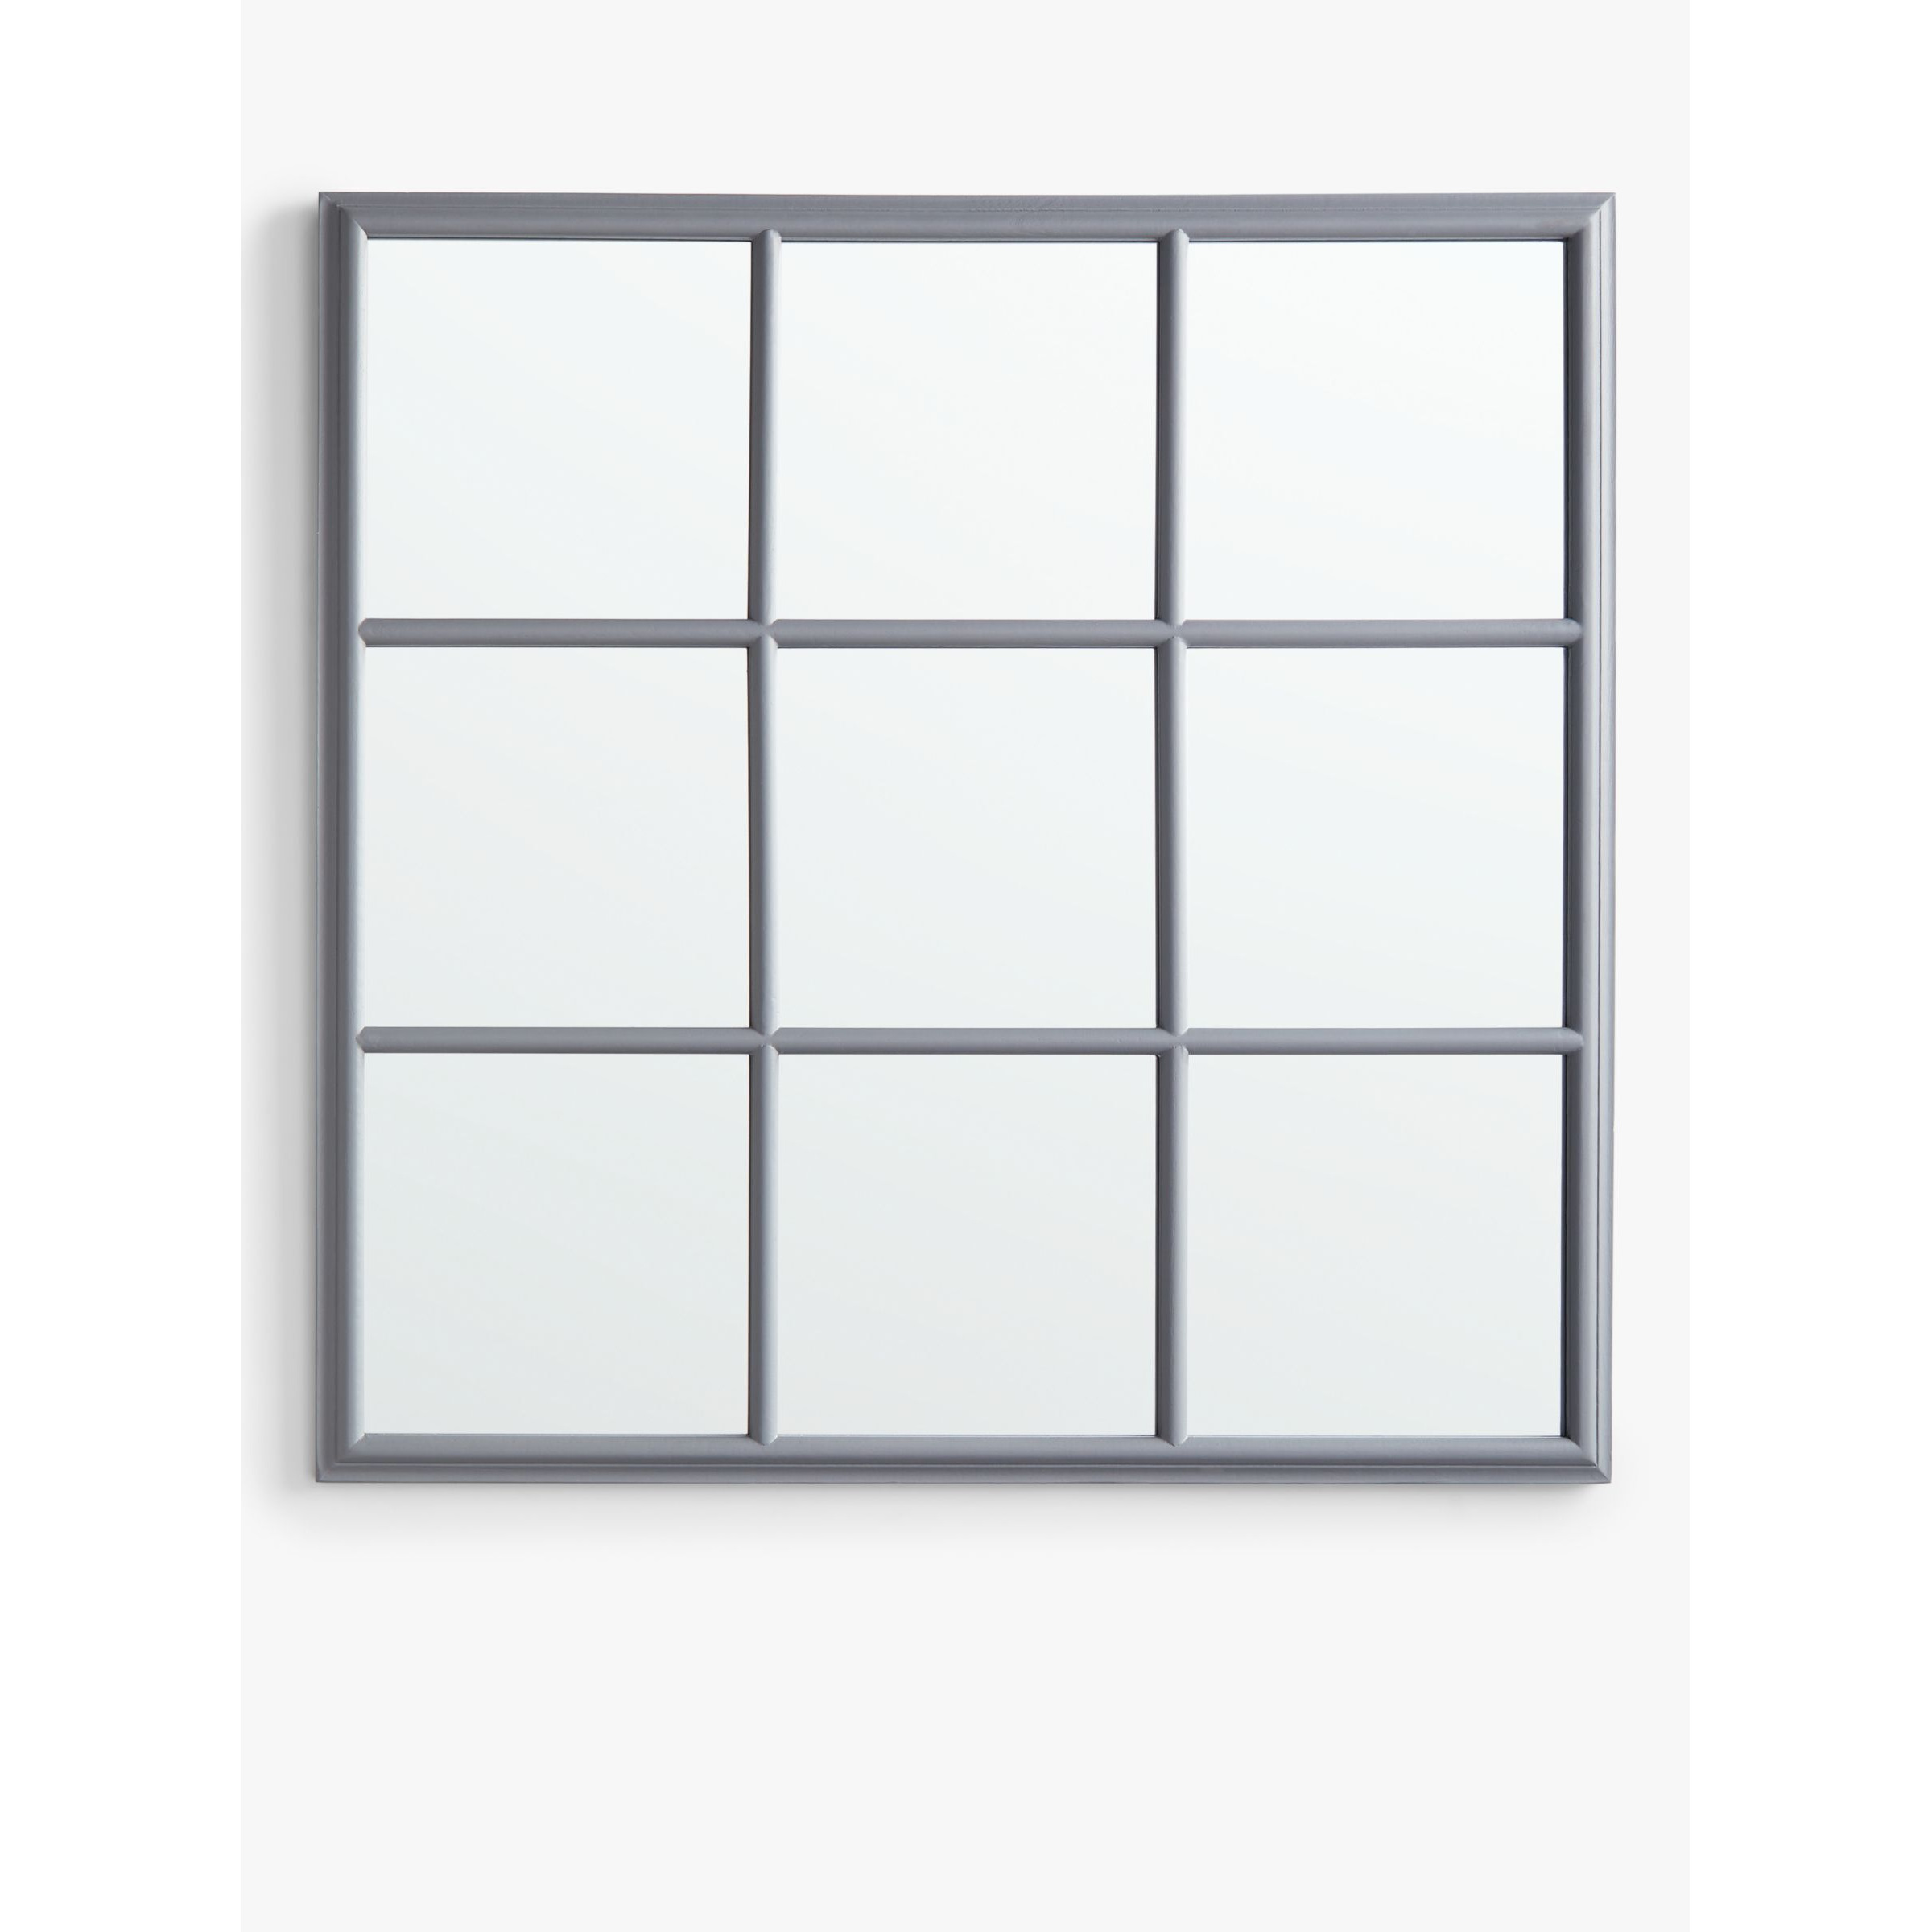 John Lewis ANYDAY Wood Frame Square Window Wall Mirror, 95 x 95cm, Grey - image 1